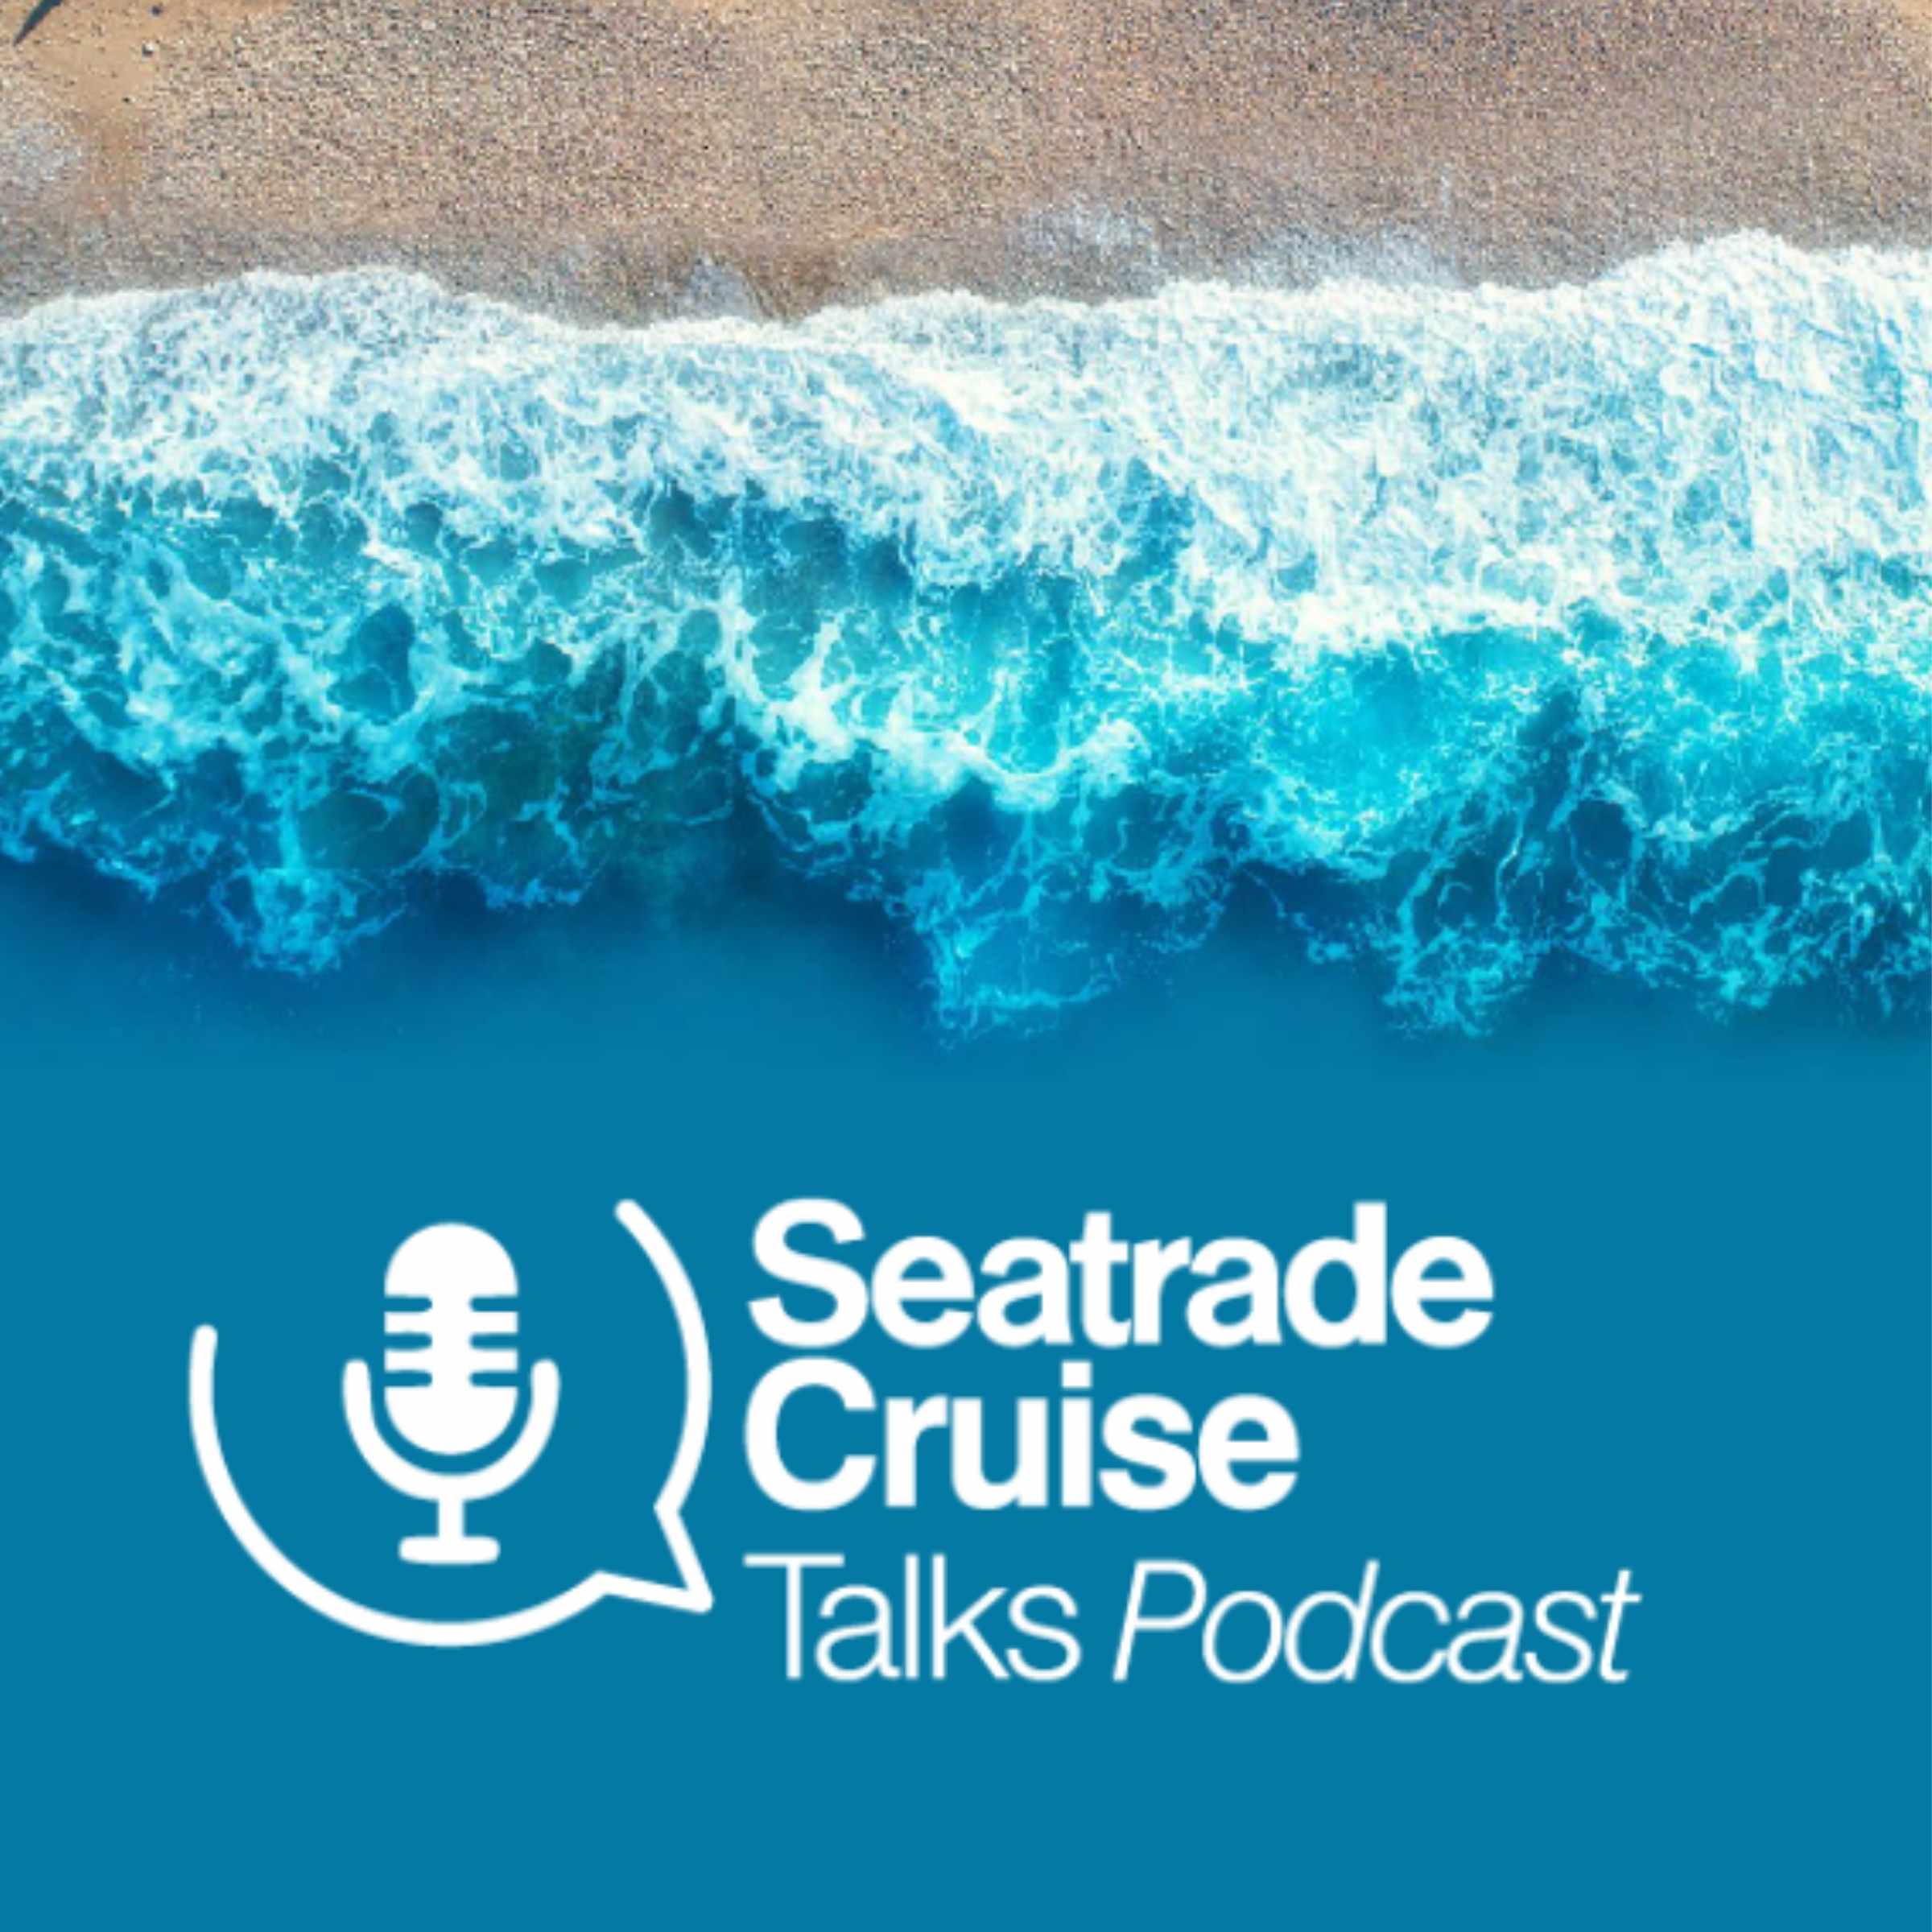 Artwork for podcast Seatrade Cruise Talks Podcast